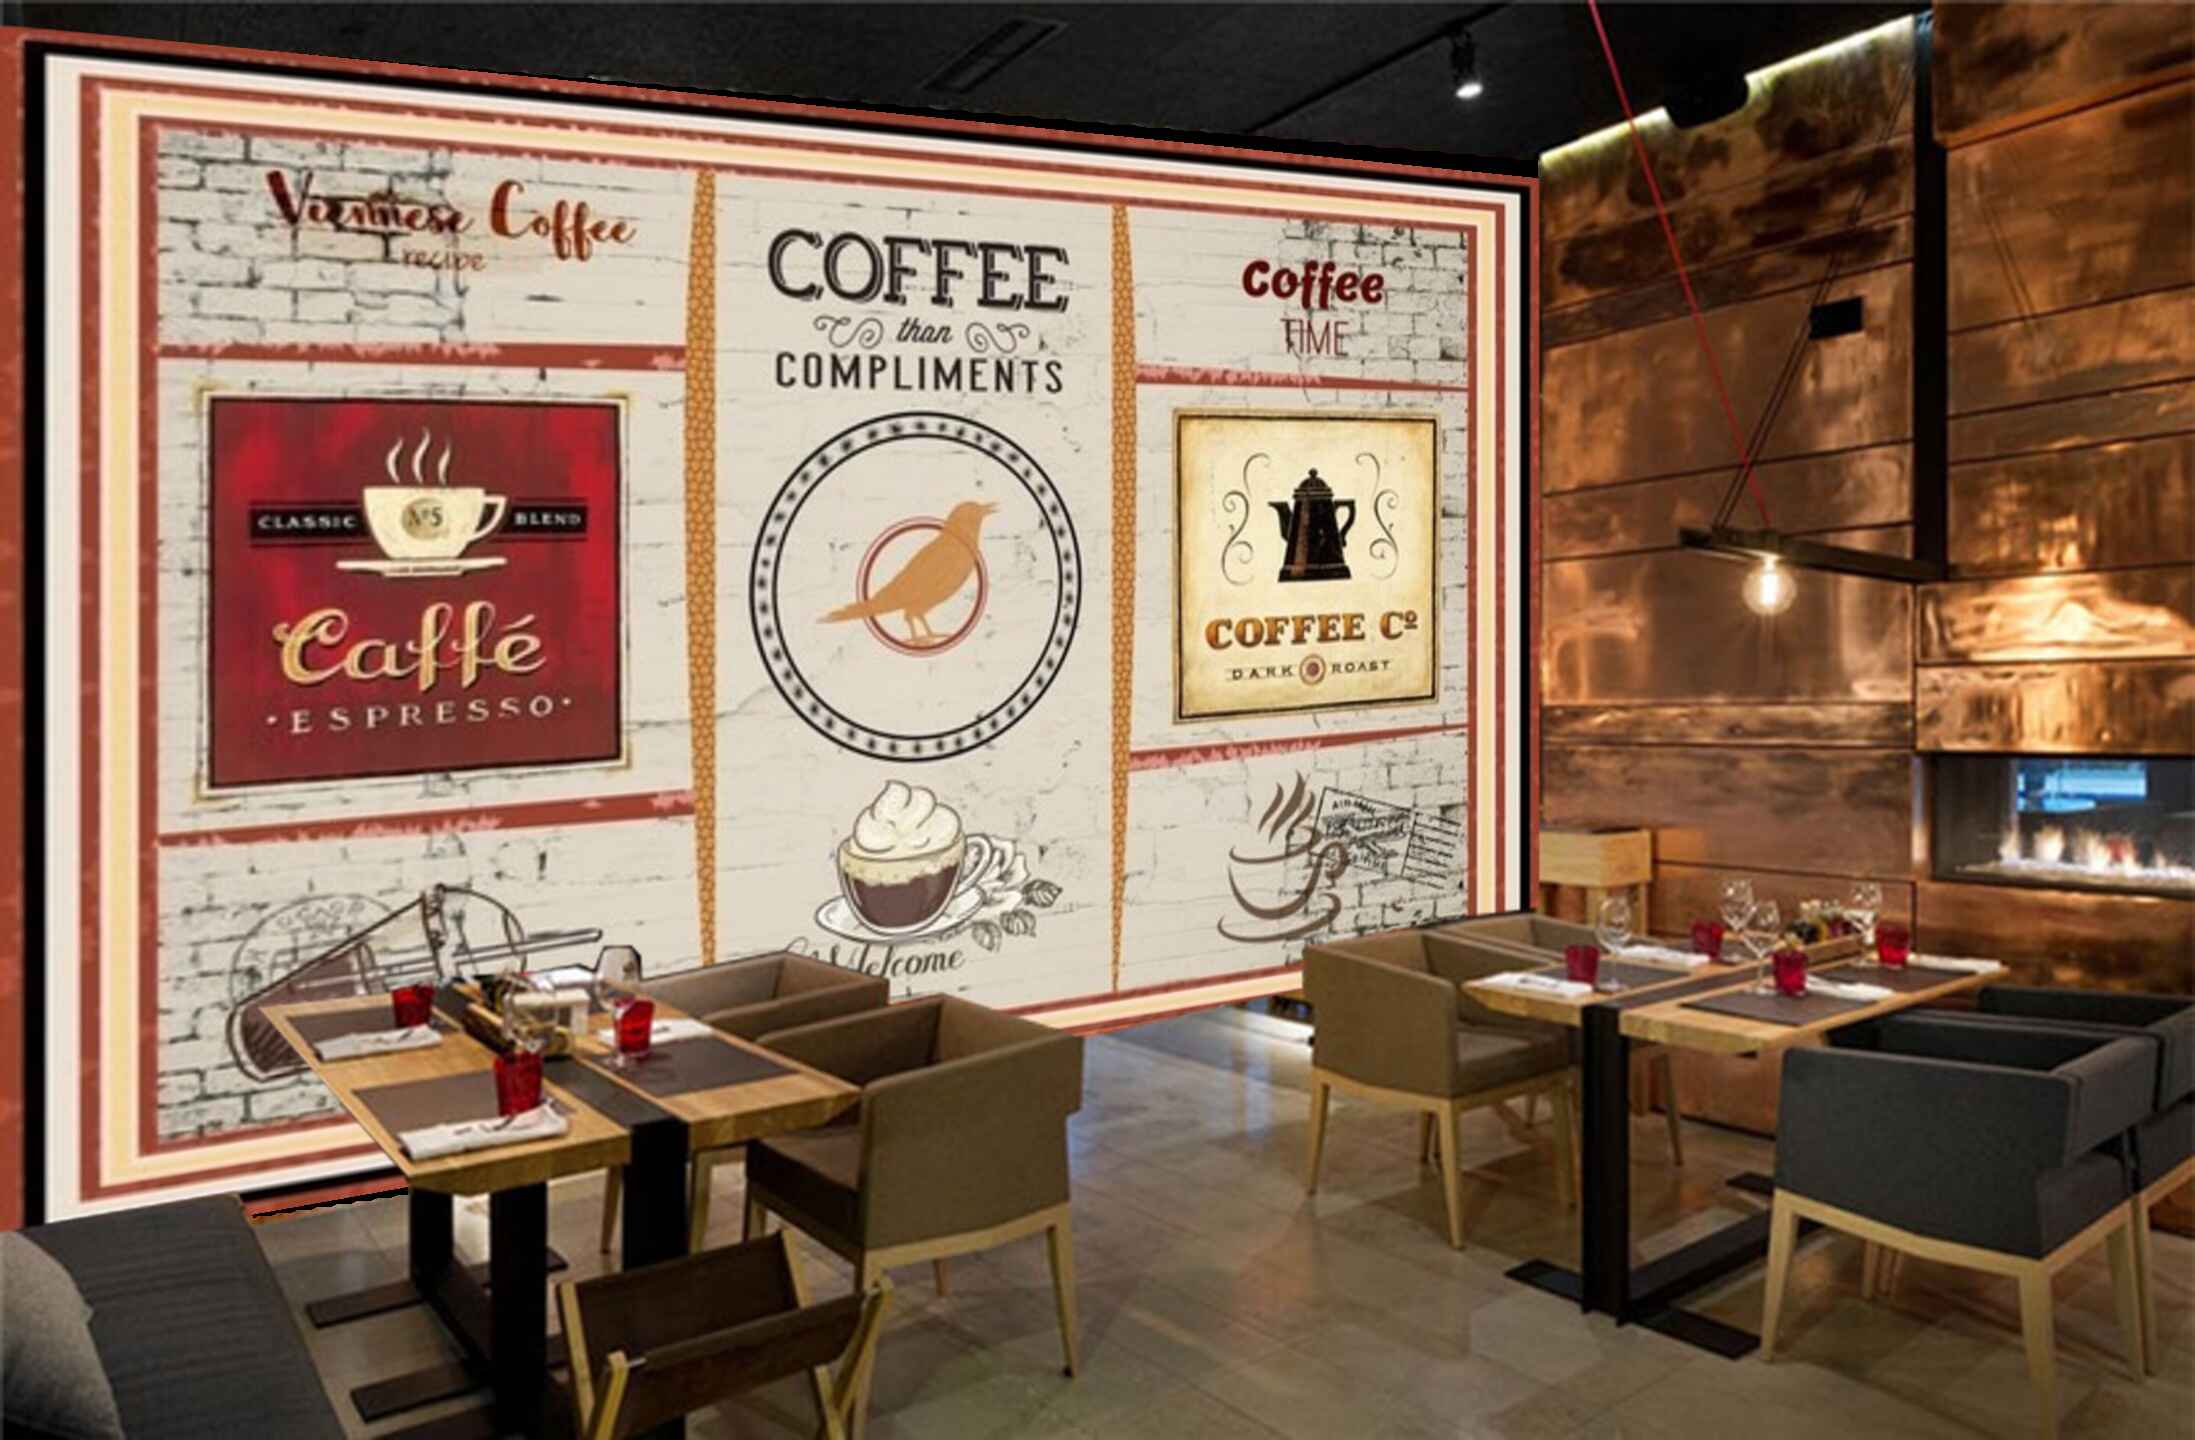 Avikalp MWZ3005 Coffee Milkshake Jug Cups HD Wallpaper for Cafe Restaurant